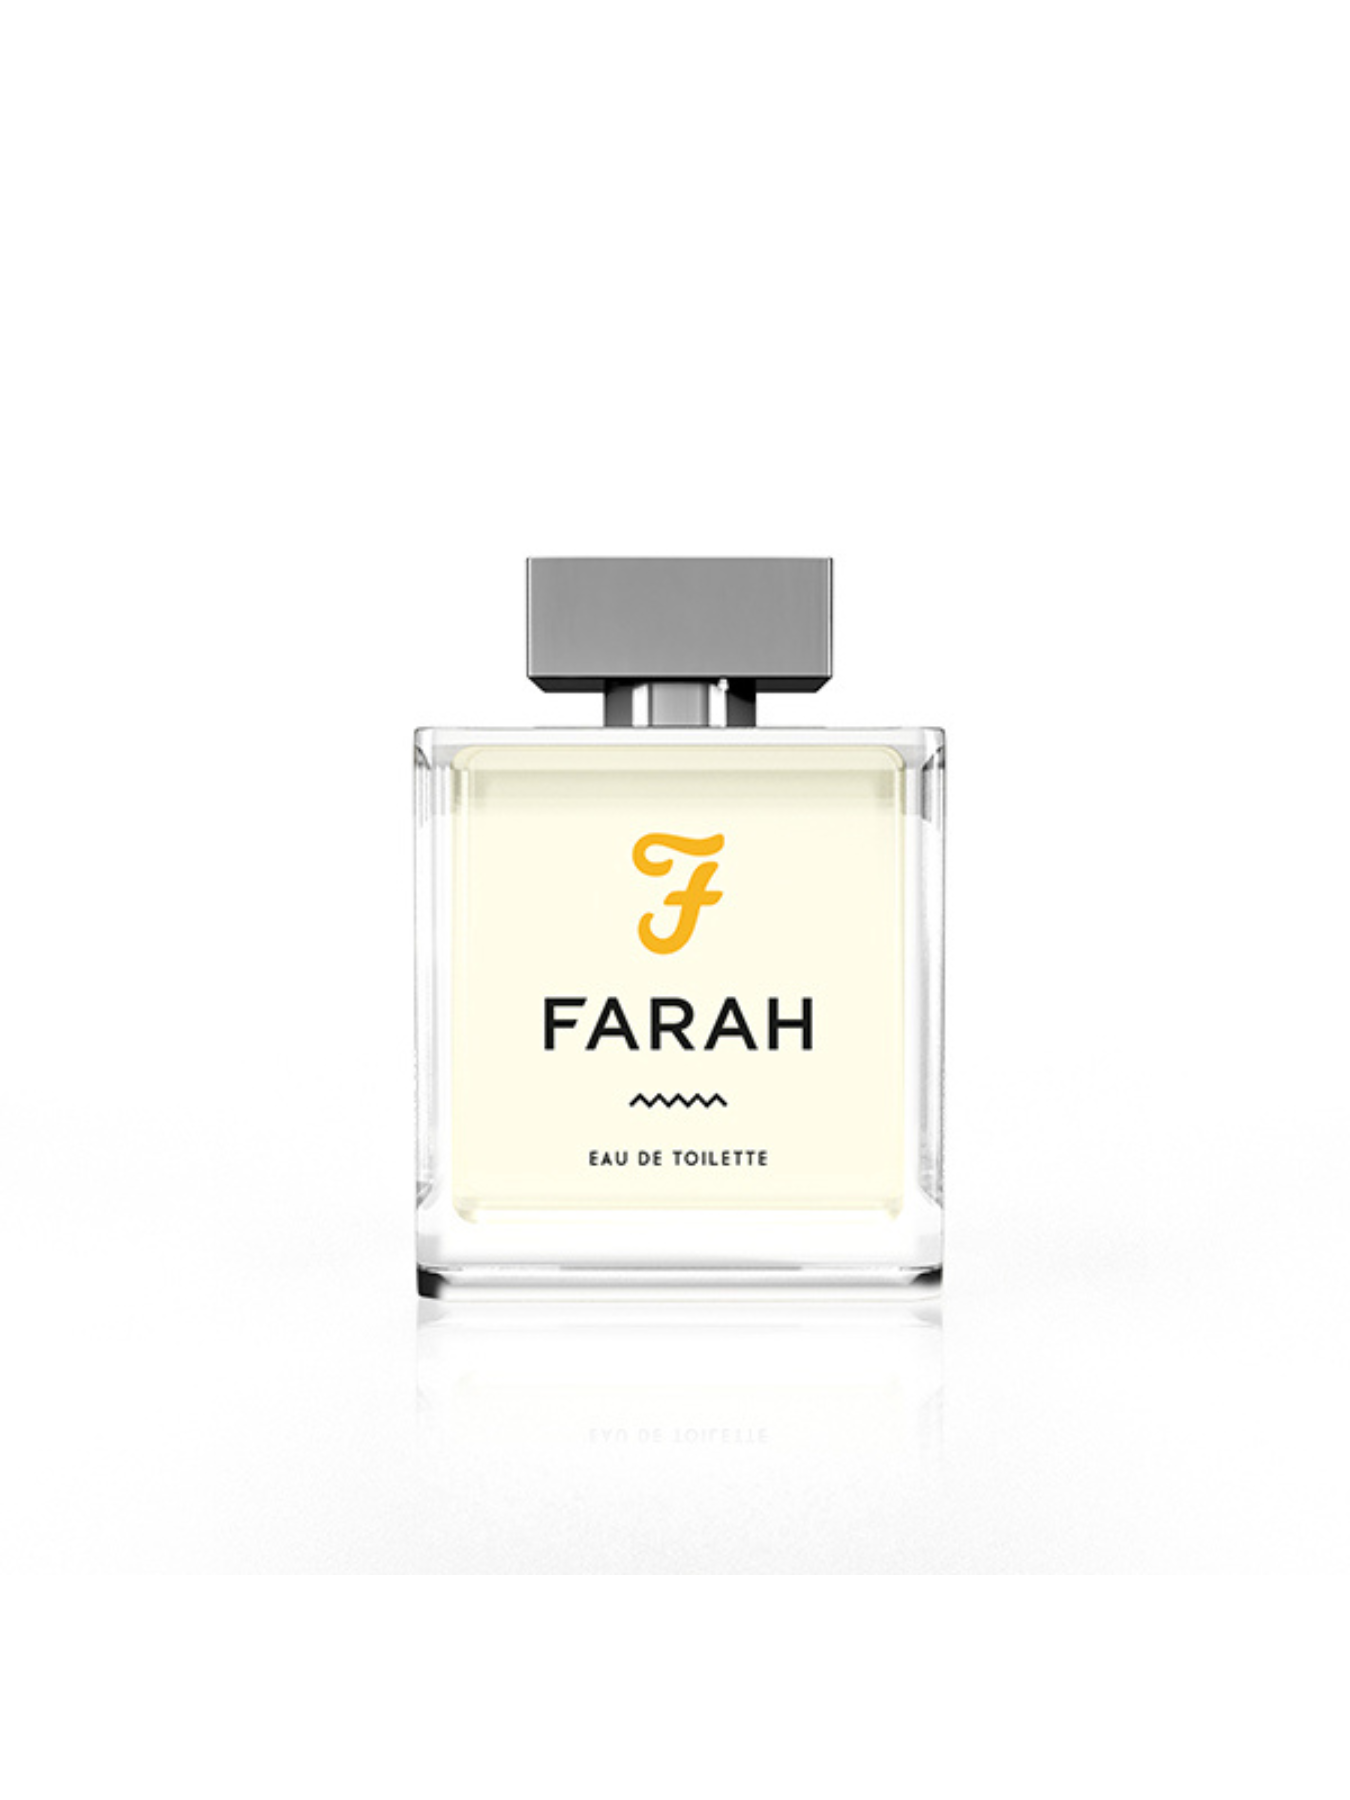 View Farah Fragrance 100ml information